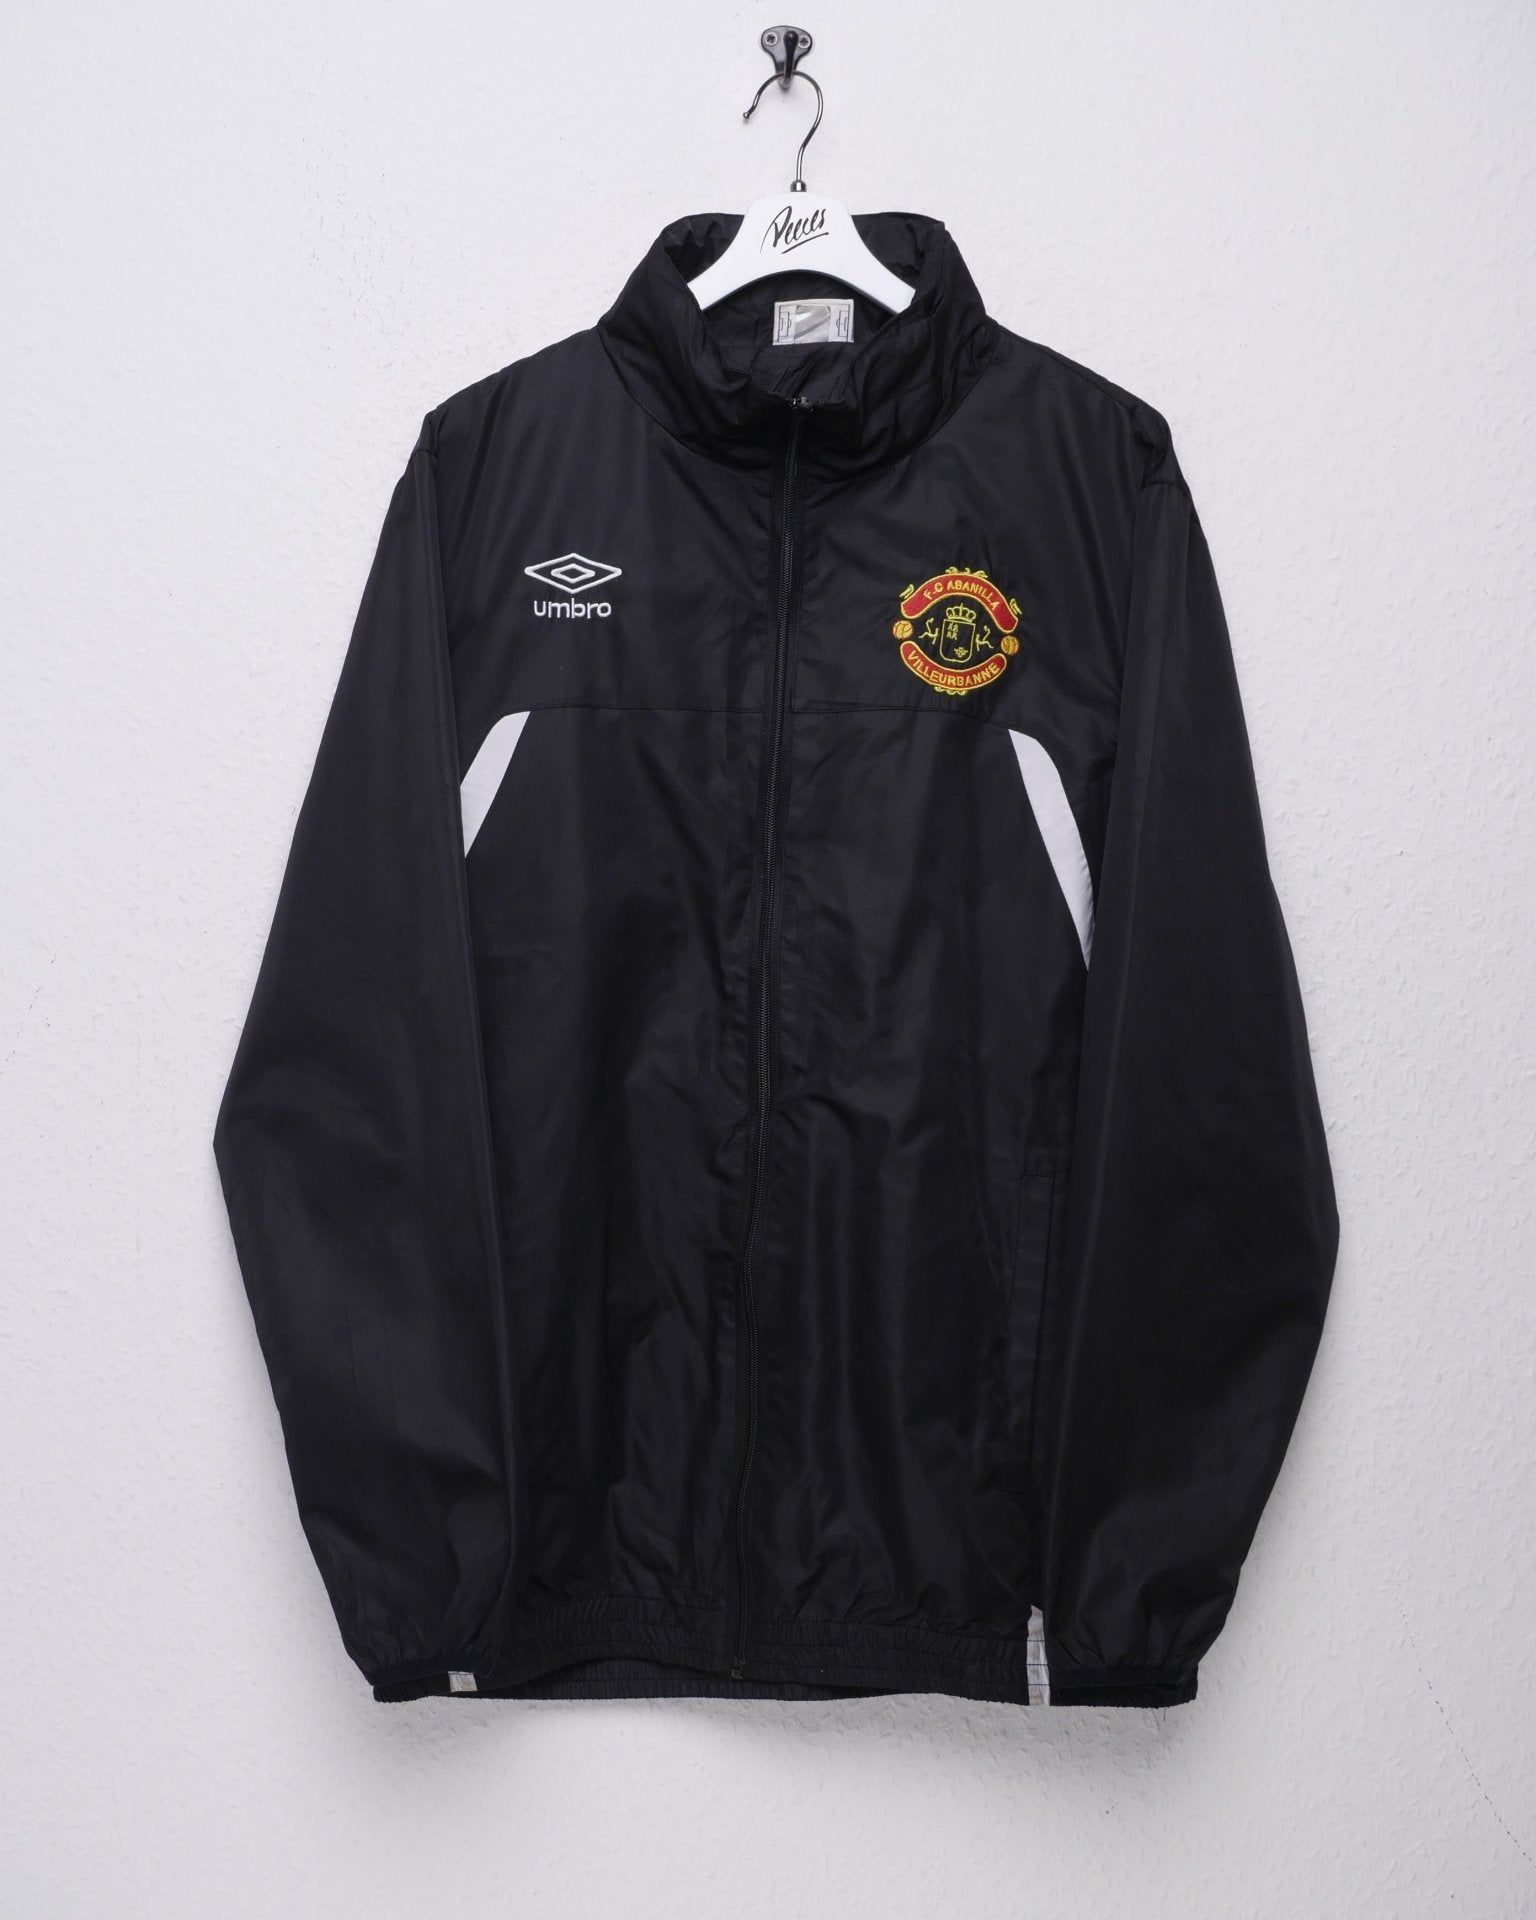 Umbro embroidered Logo 'FC Abanilla' Soccer black Track Jacket - Peeces